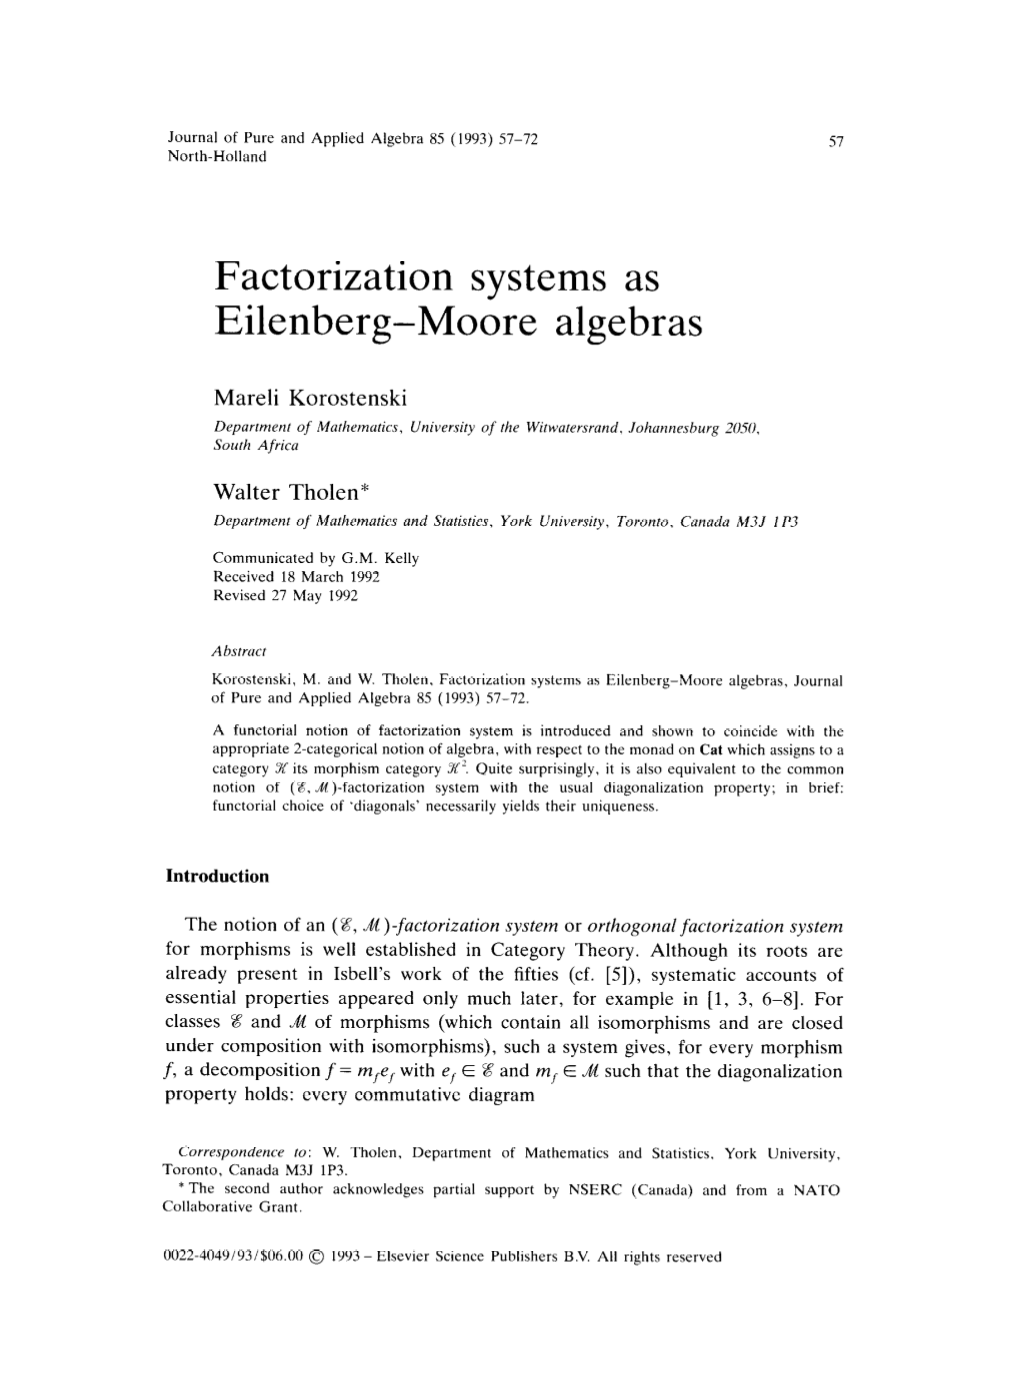 Factorization Systems As Eilenberg-Moore Algebras